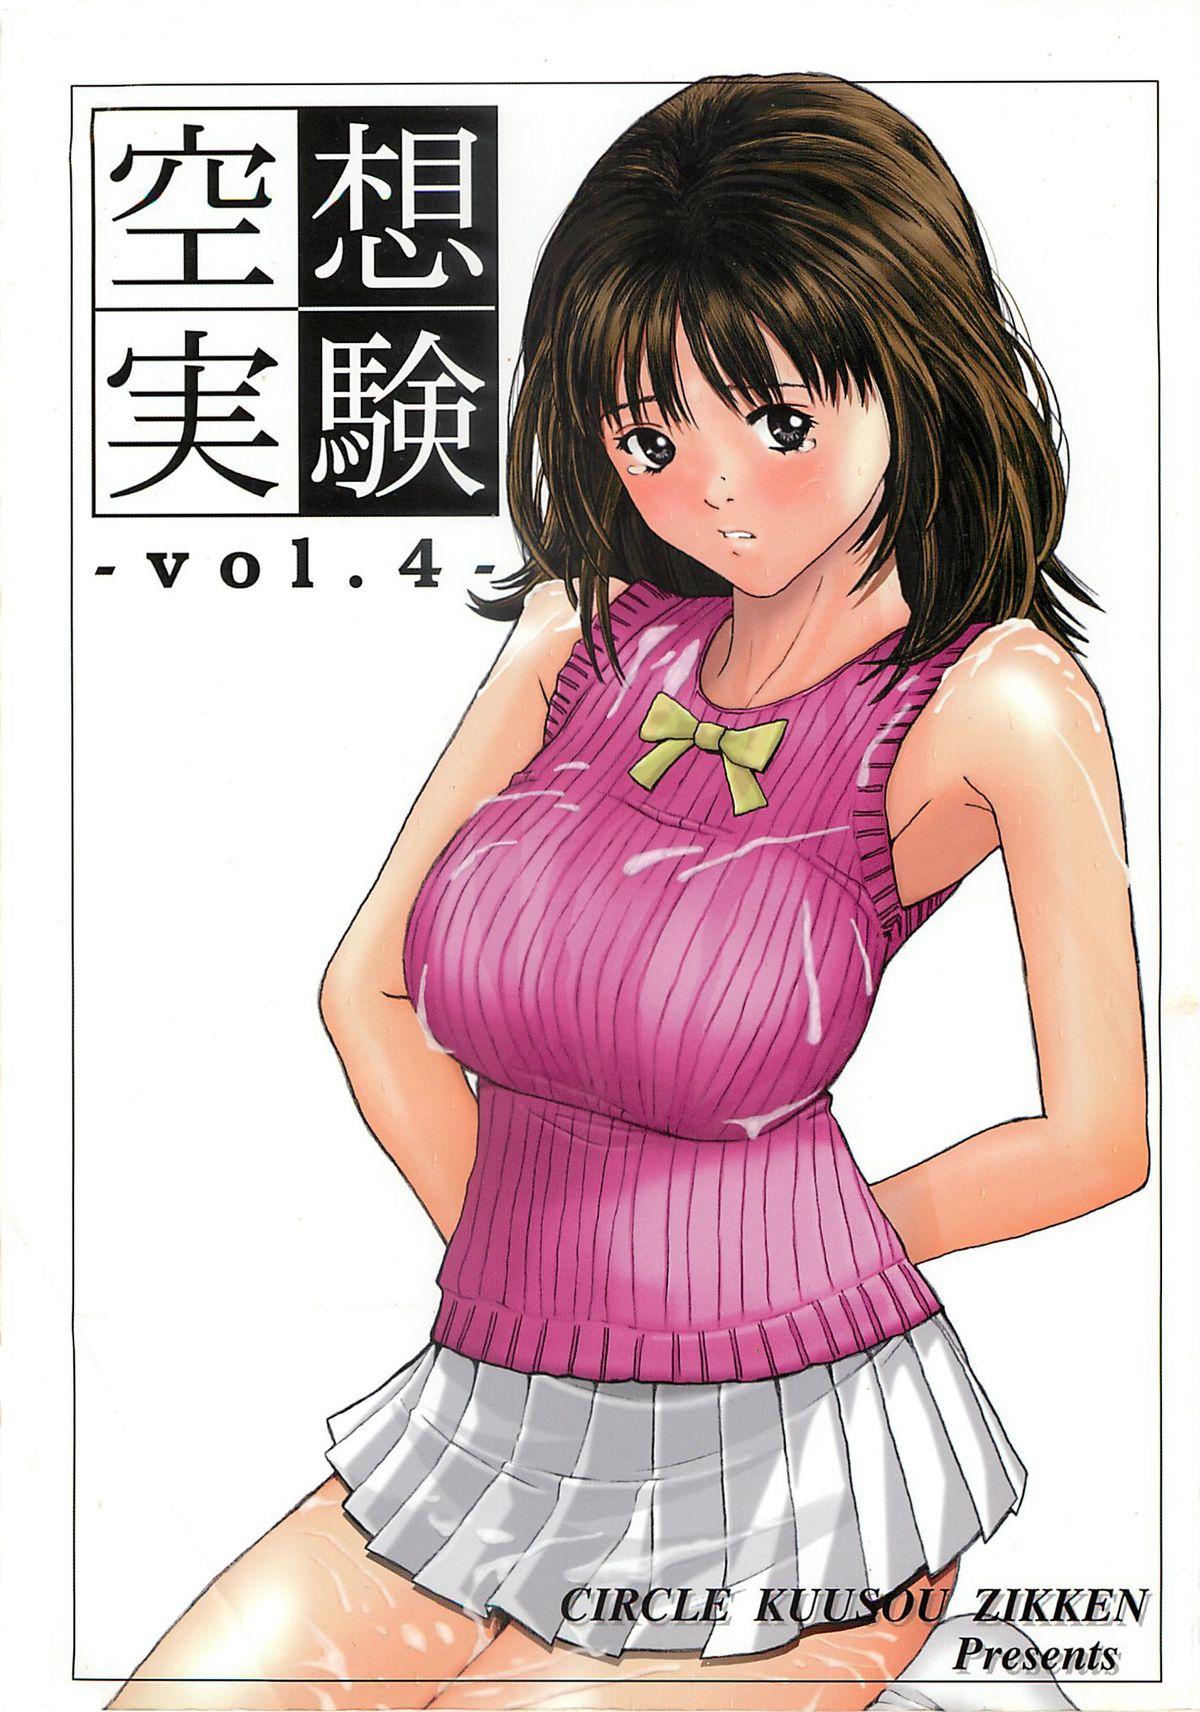 Girls Kuusou Zikken vol.4 - Is Ffm - Picture 1